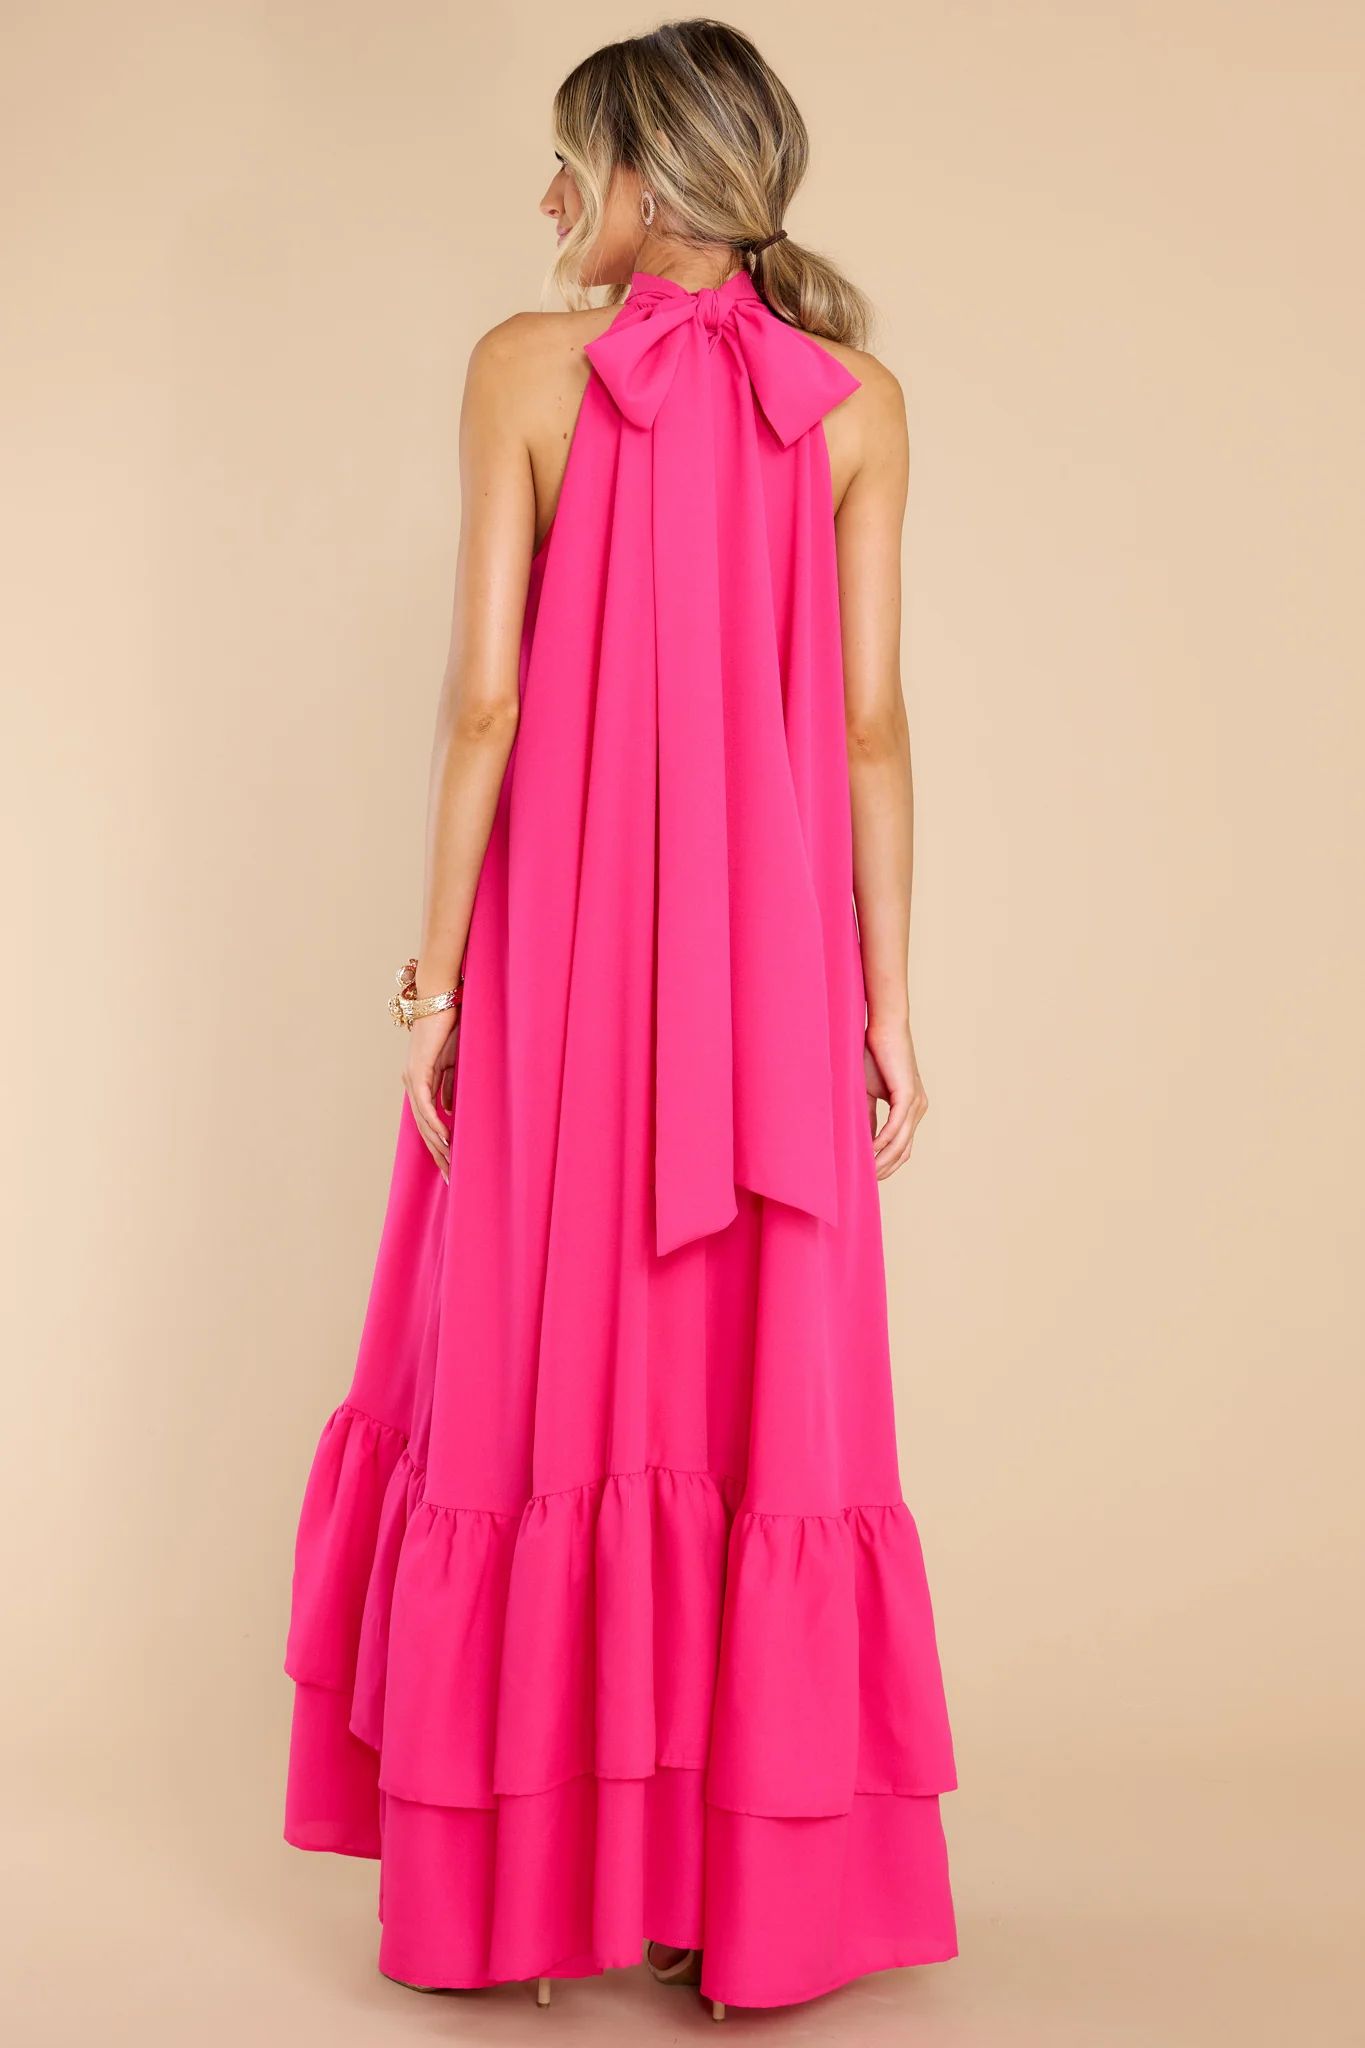 She Is Magic Hot Pink Maxi Dress | Red Dress 